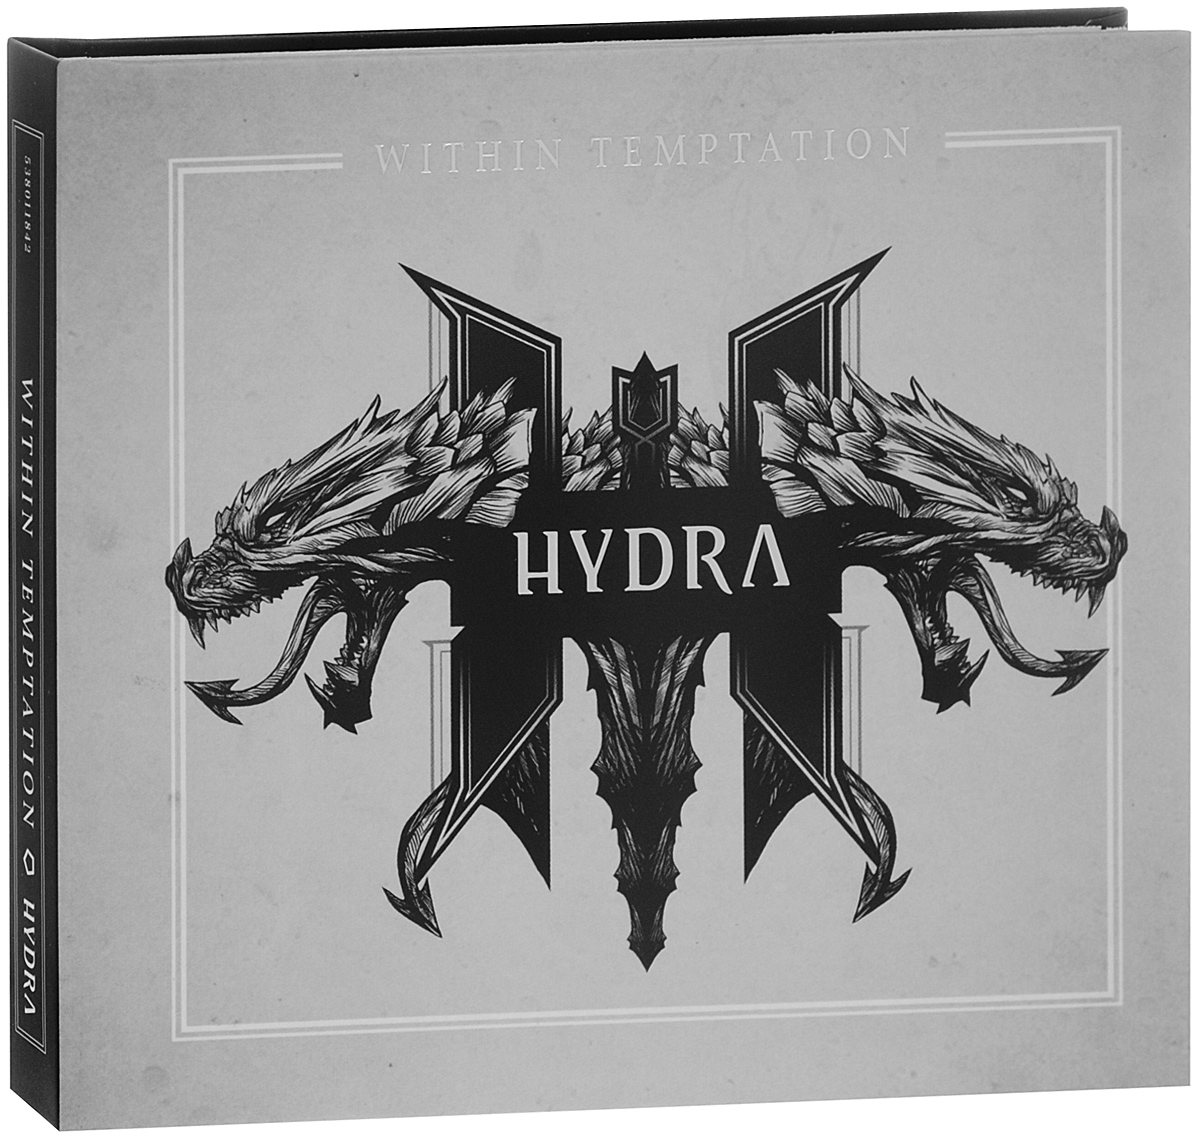 Within Temptation. Hydra (2 CD)